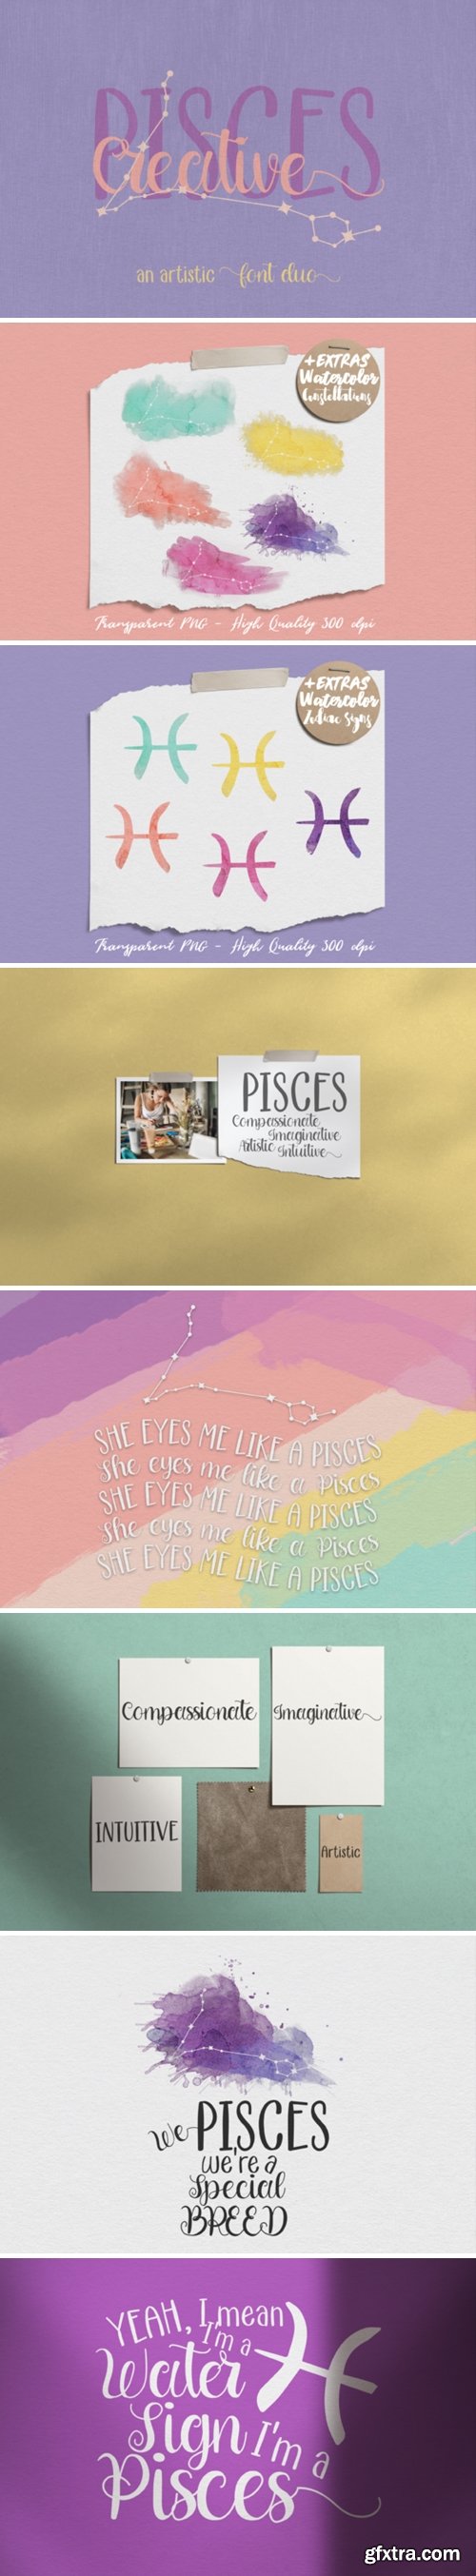 Creative Pisces Duo Font